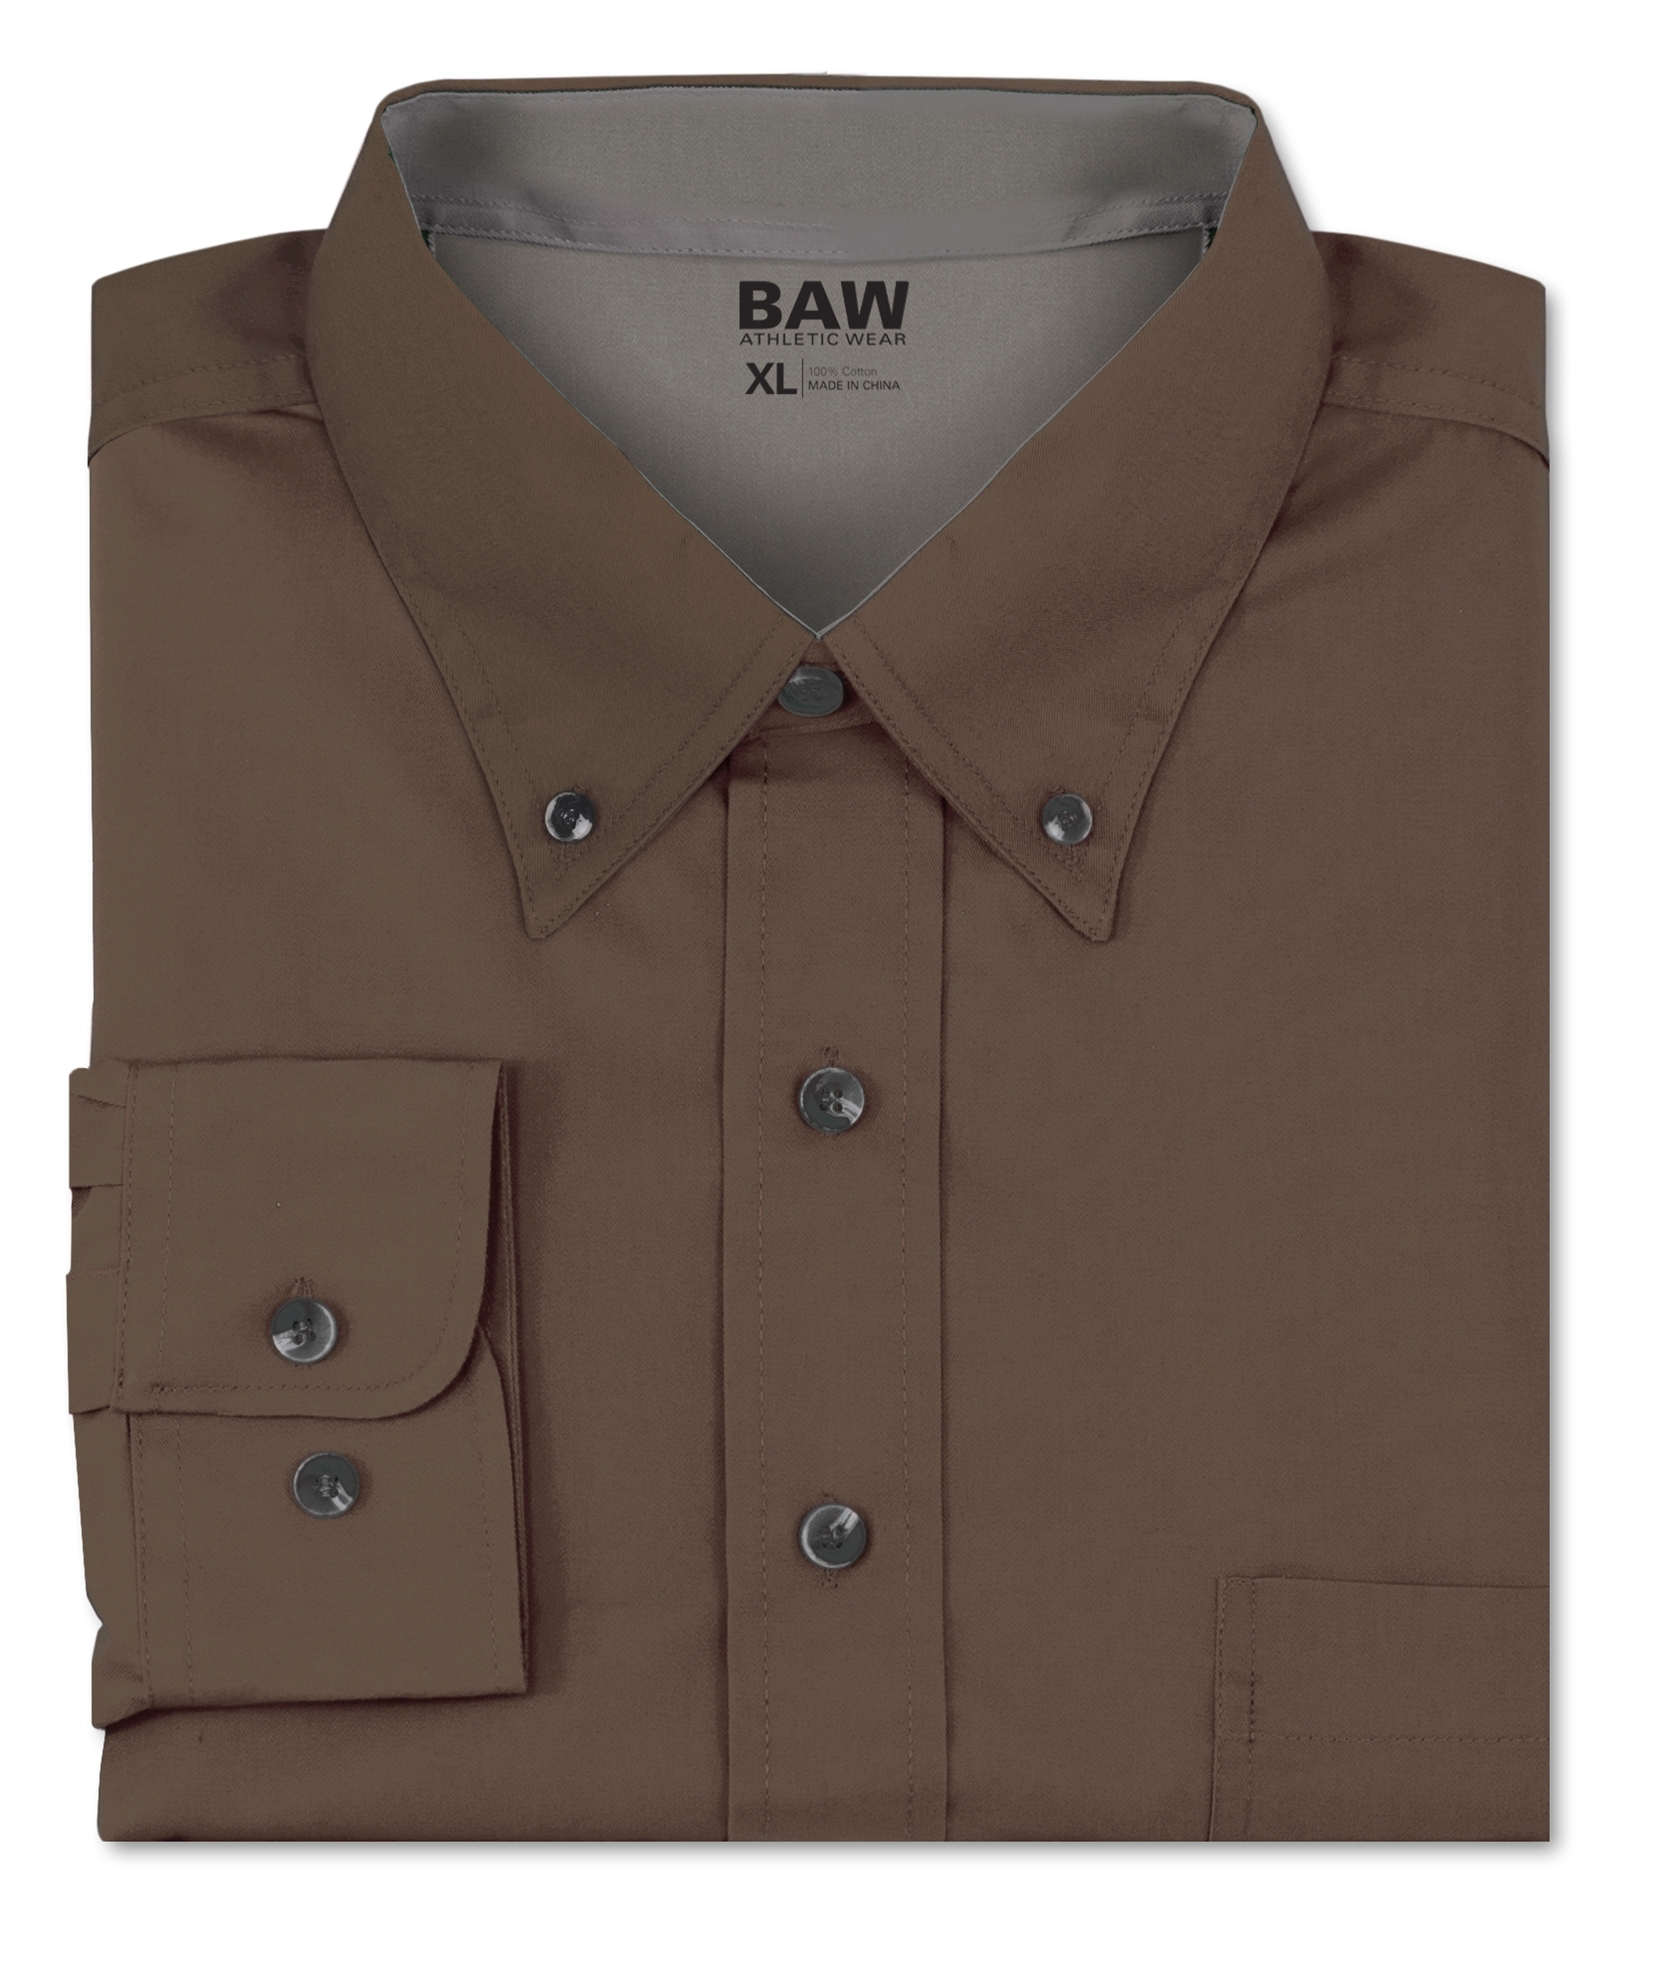 BAW Athletic Wear TL301 - Men's Classic Long Sleeve Twill Shirt